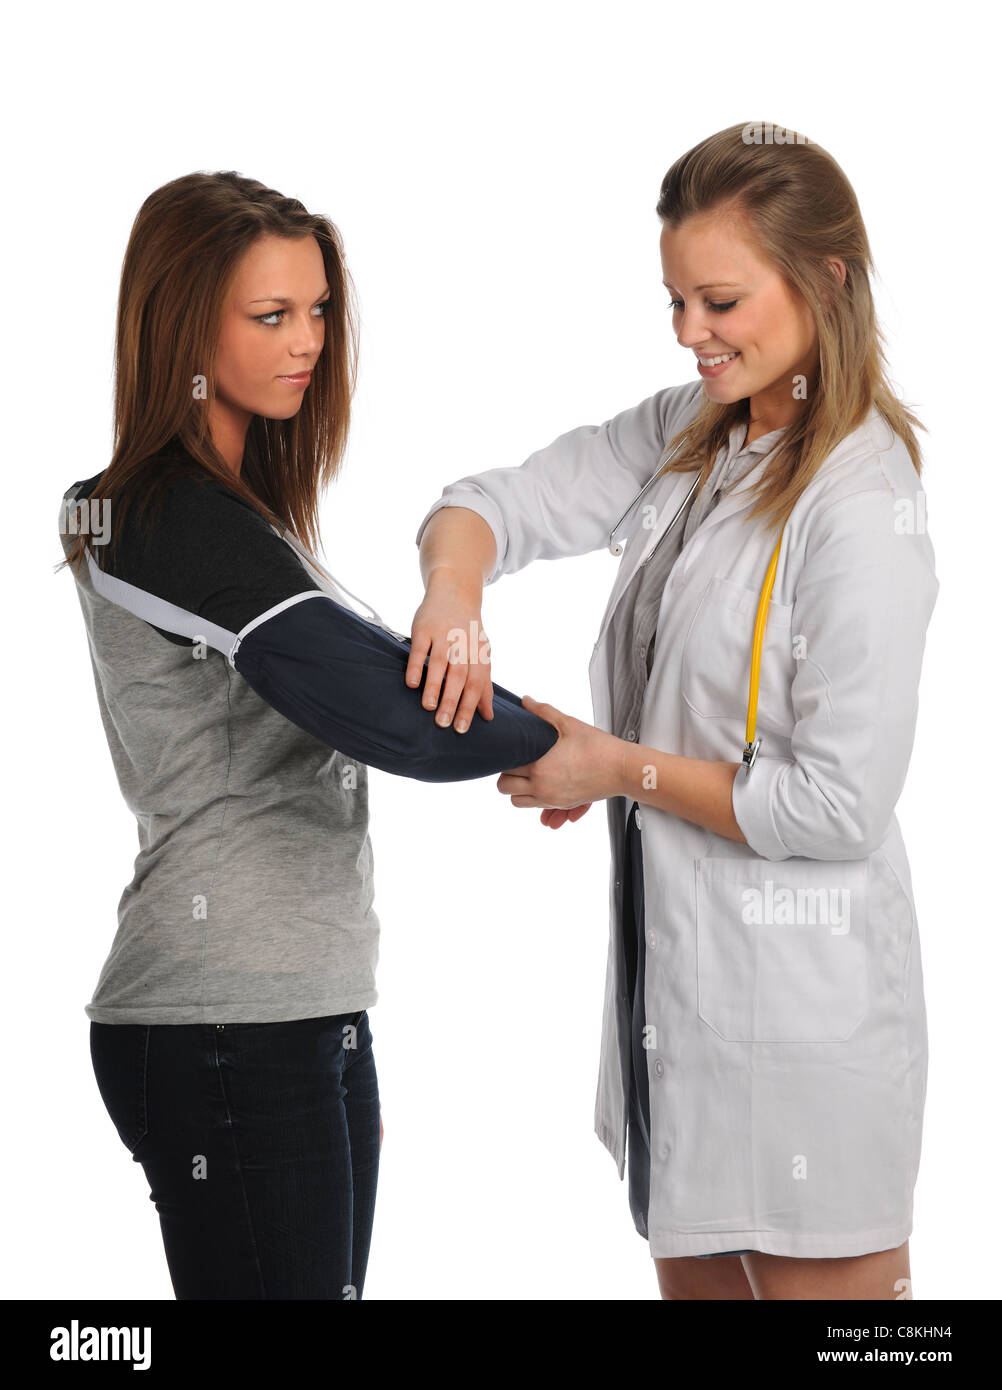 Médecin ou infirmière aider jeune femme avec renfort bras isolated over white background Banque D'Images